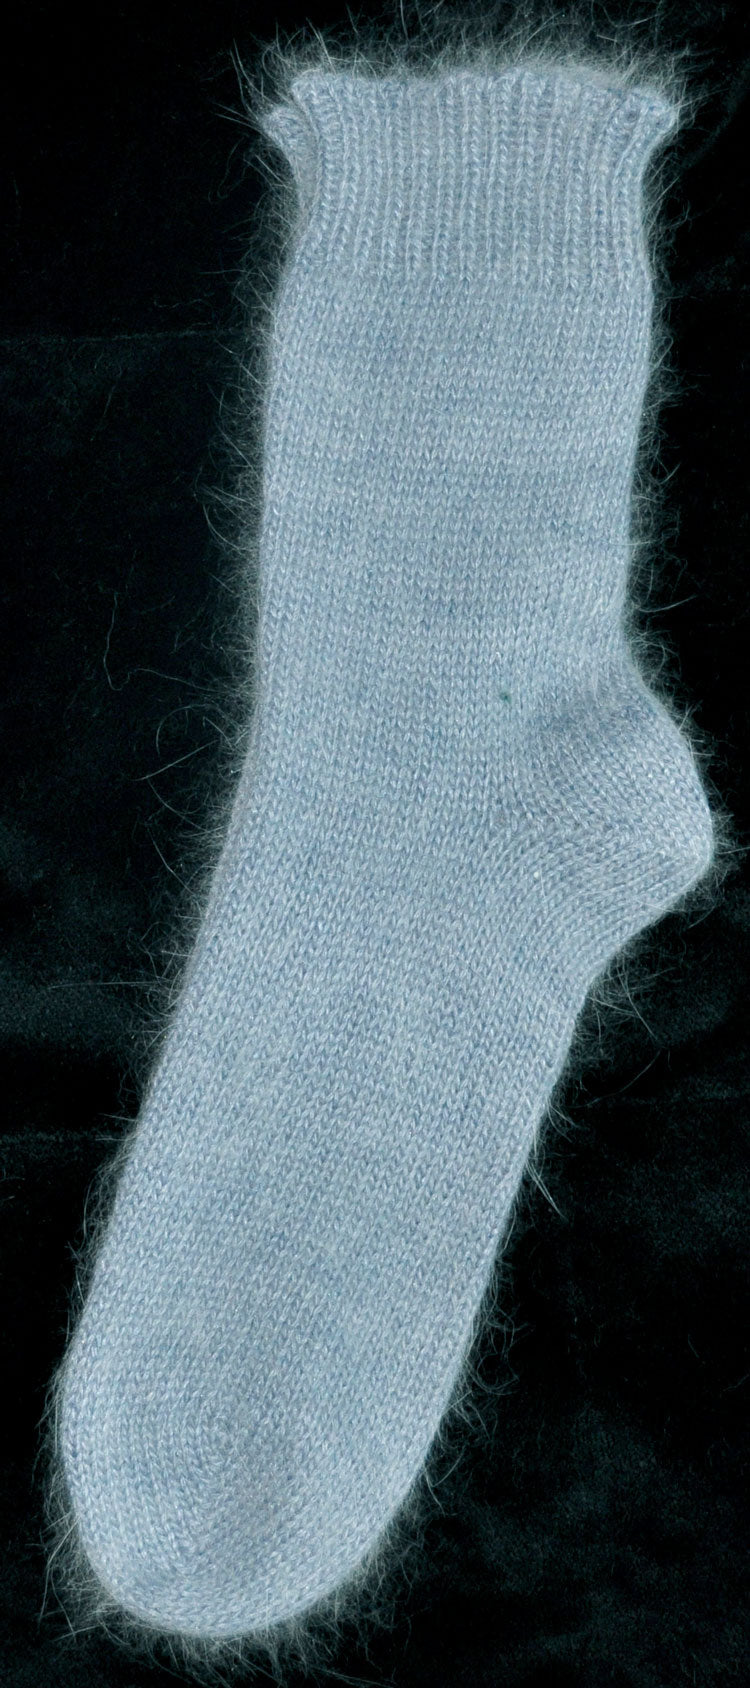 Socks - Tencel and Merino Wool – Fly Designs